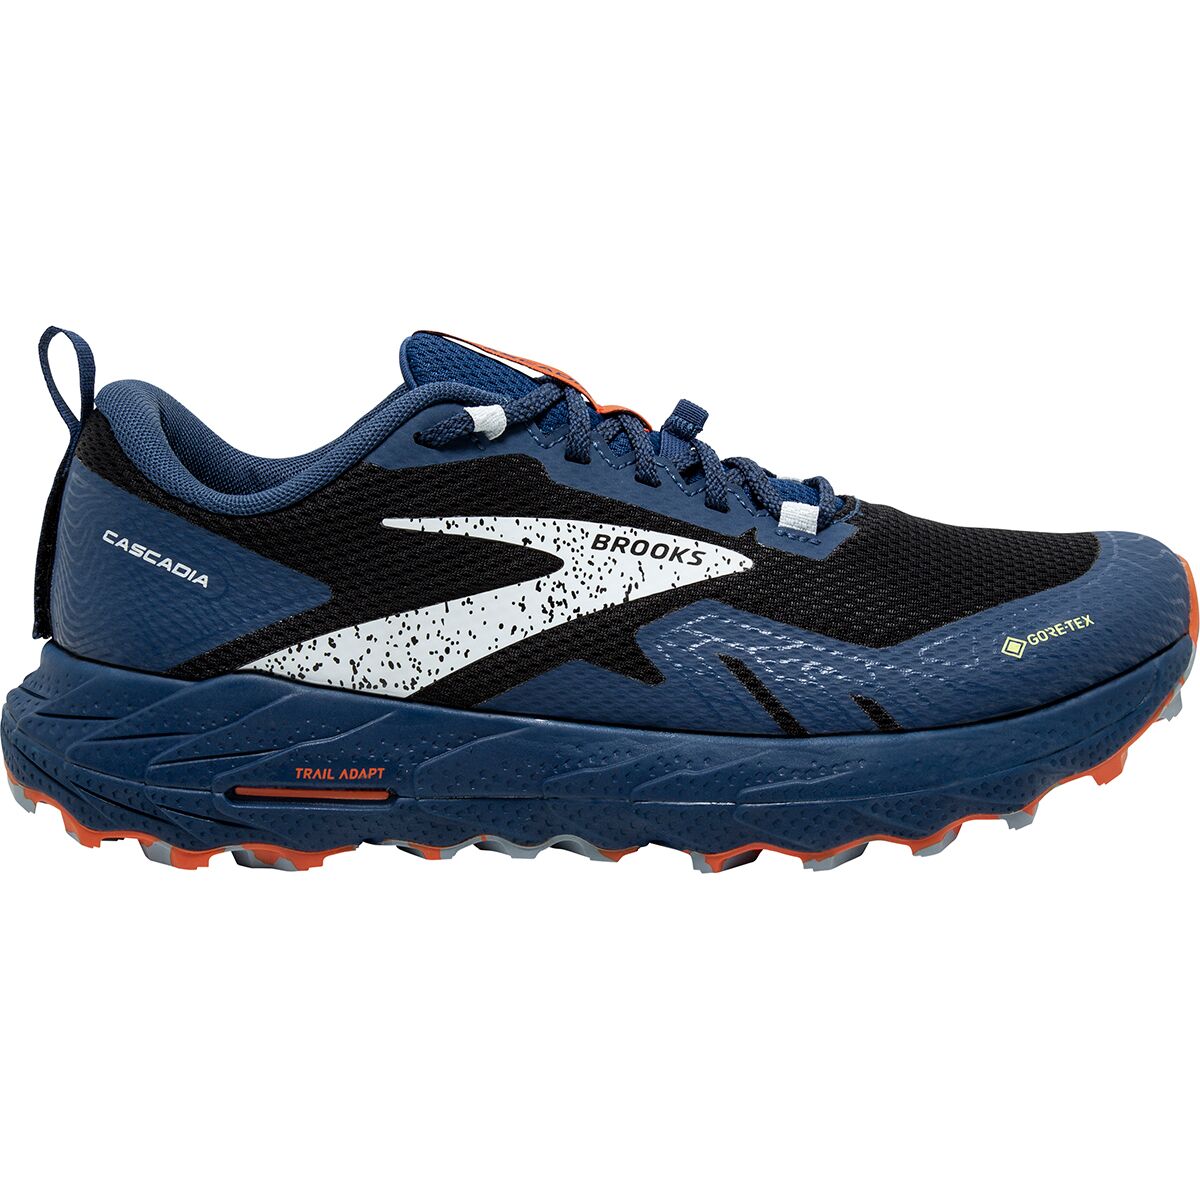 Brooks Cascadia 17 GTX Trail Running Shoe - Men's Black/Blue/Firecracker, 11.0